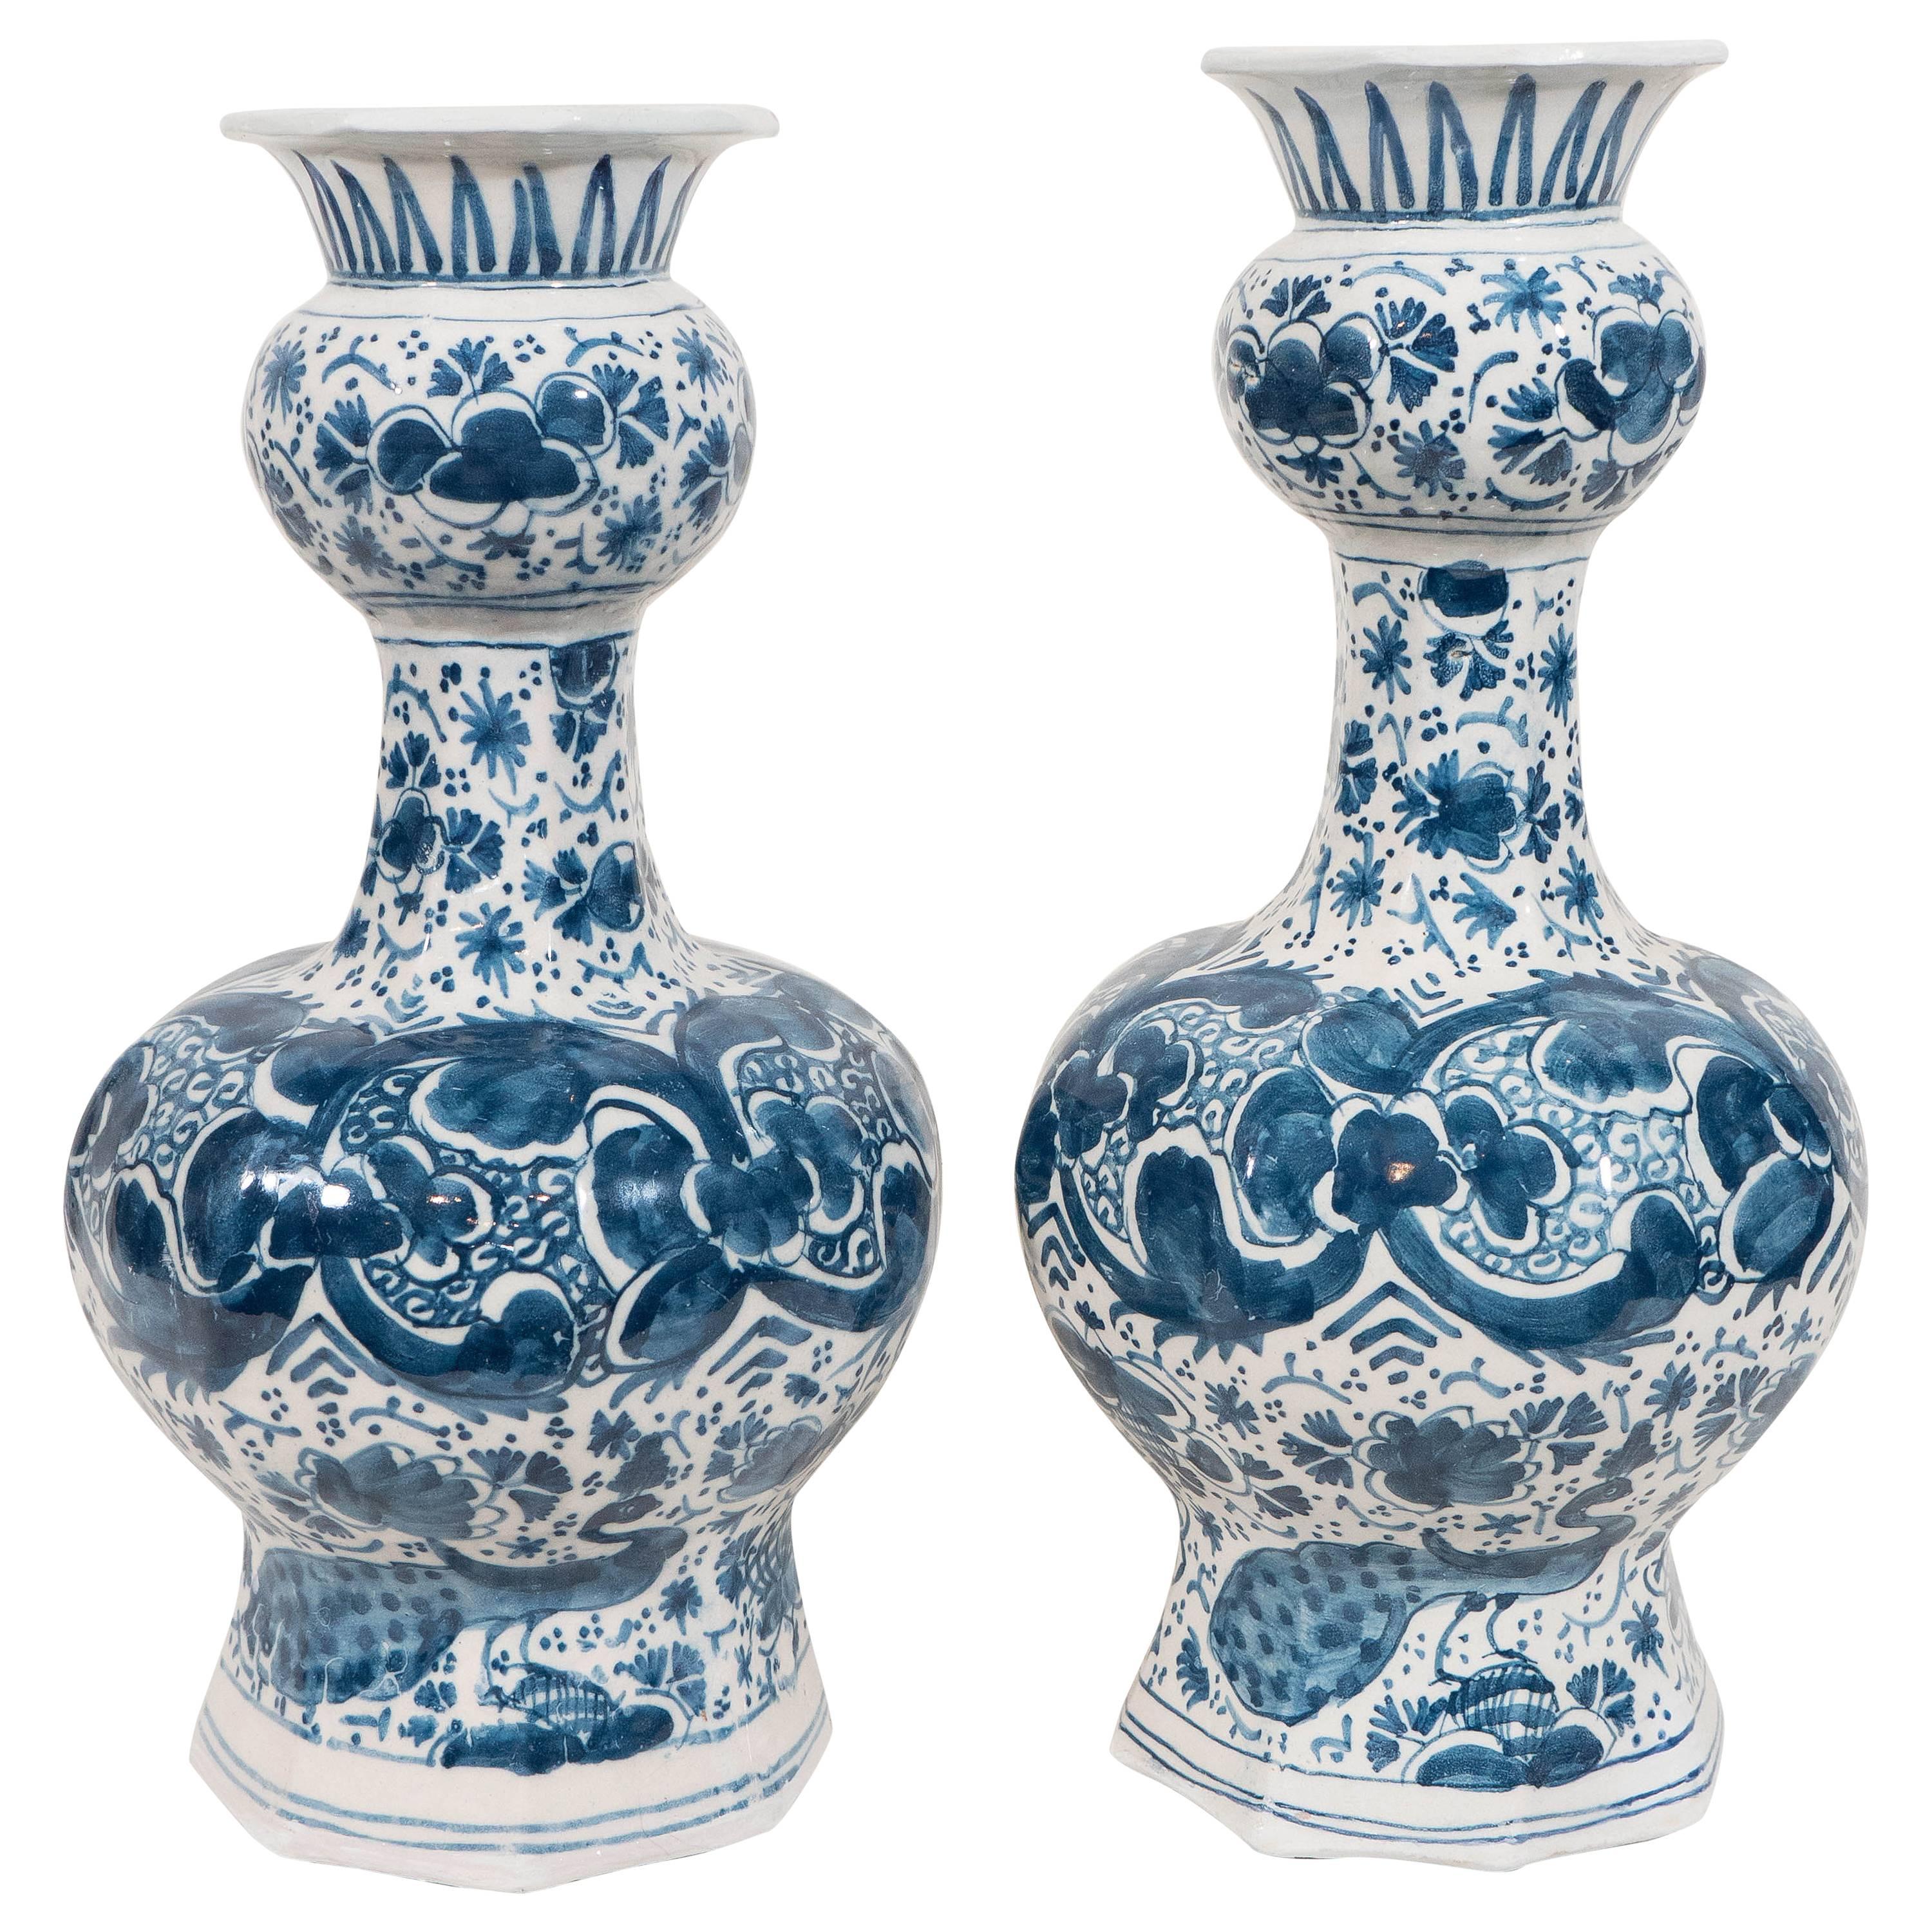 Antique Blue and White Delft Vases